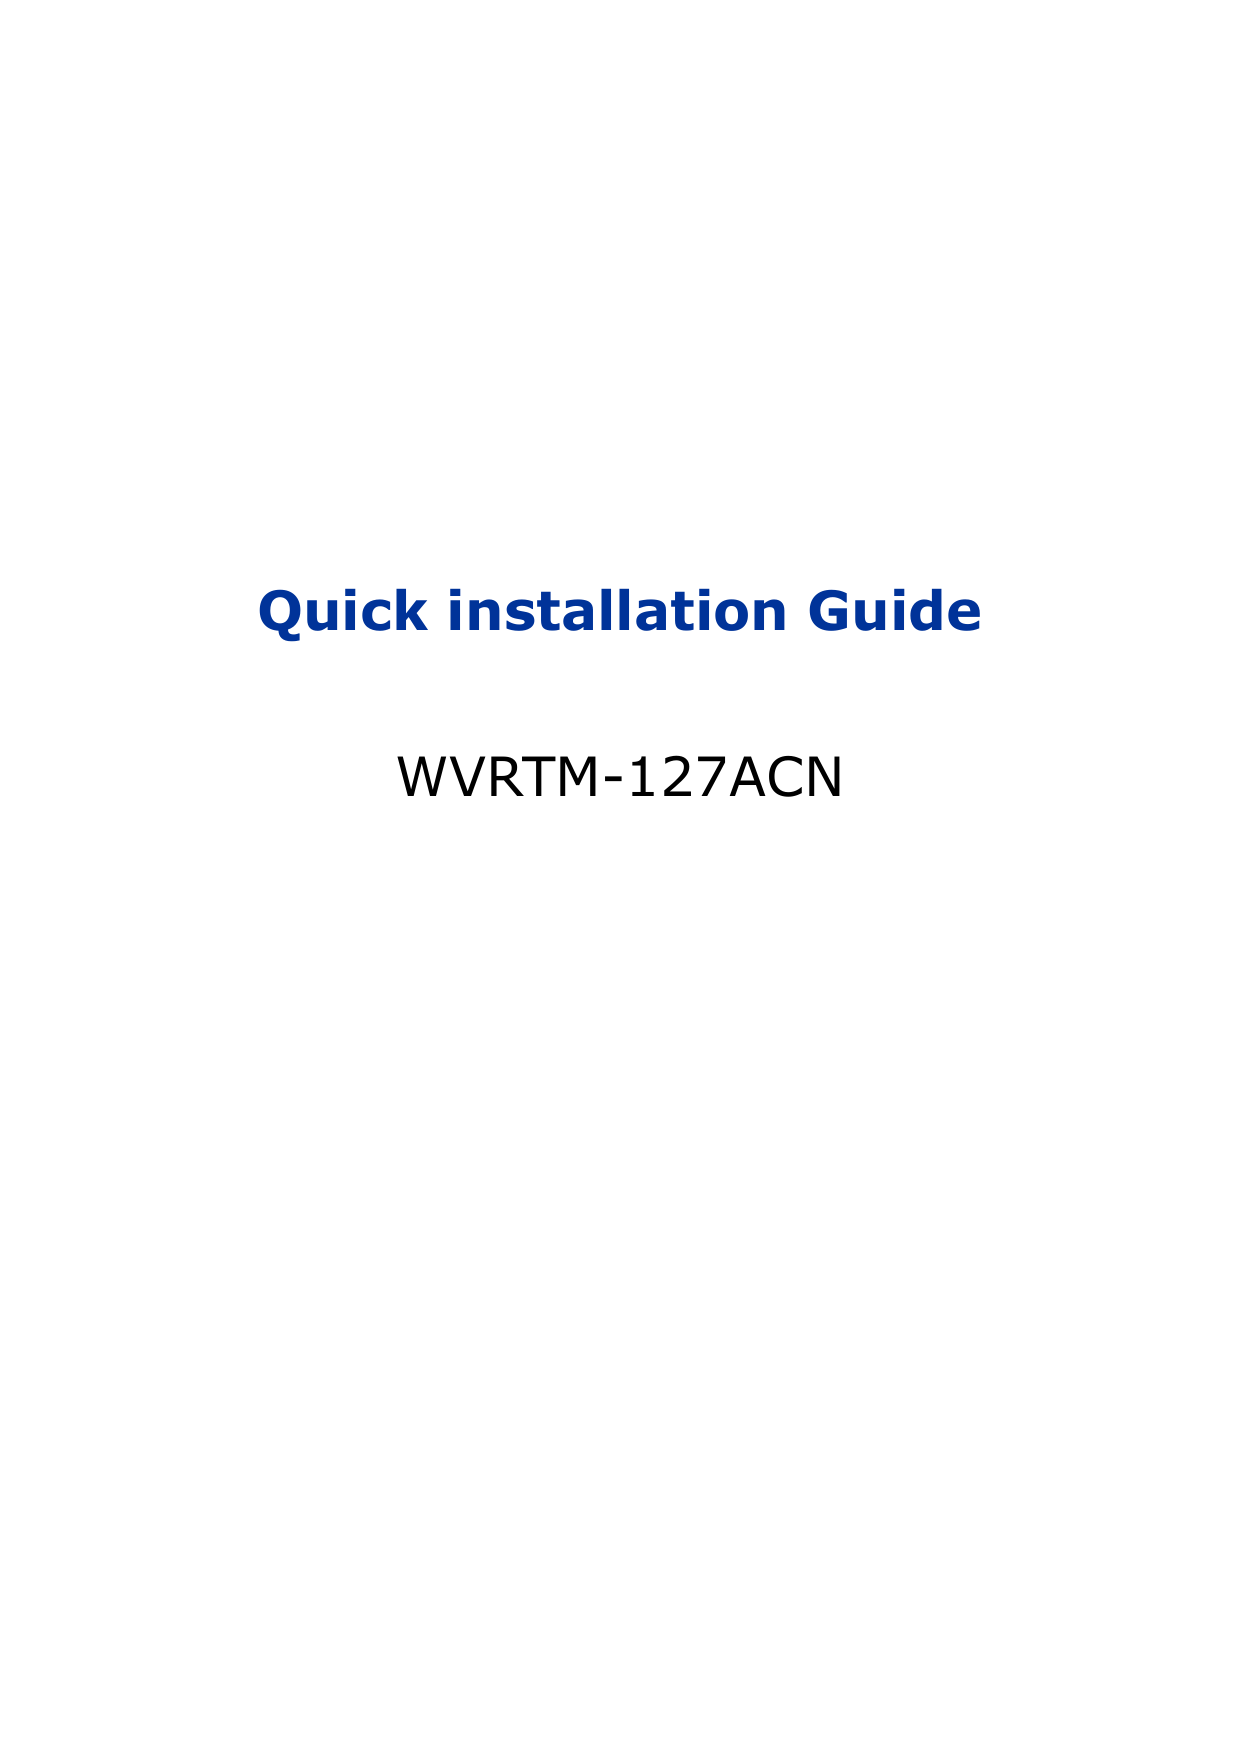      Quick installation Guide  WVRTM-127ACN                